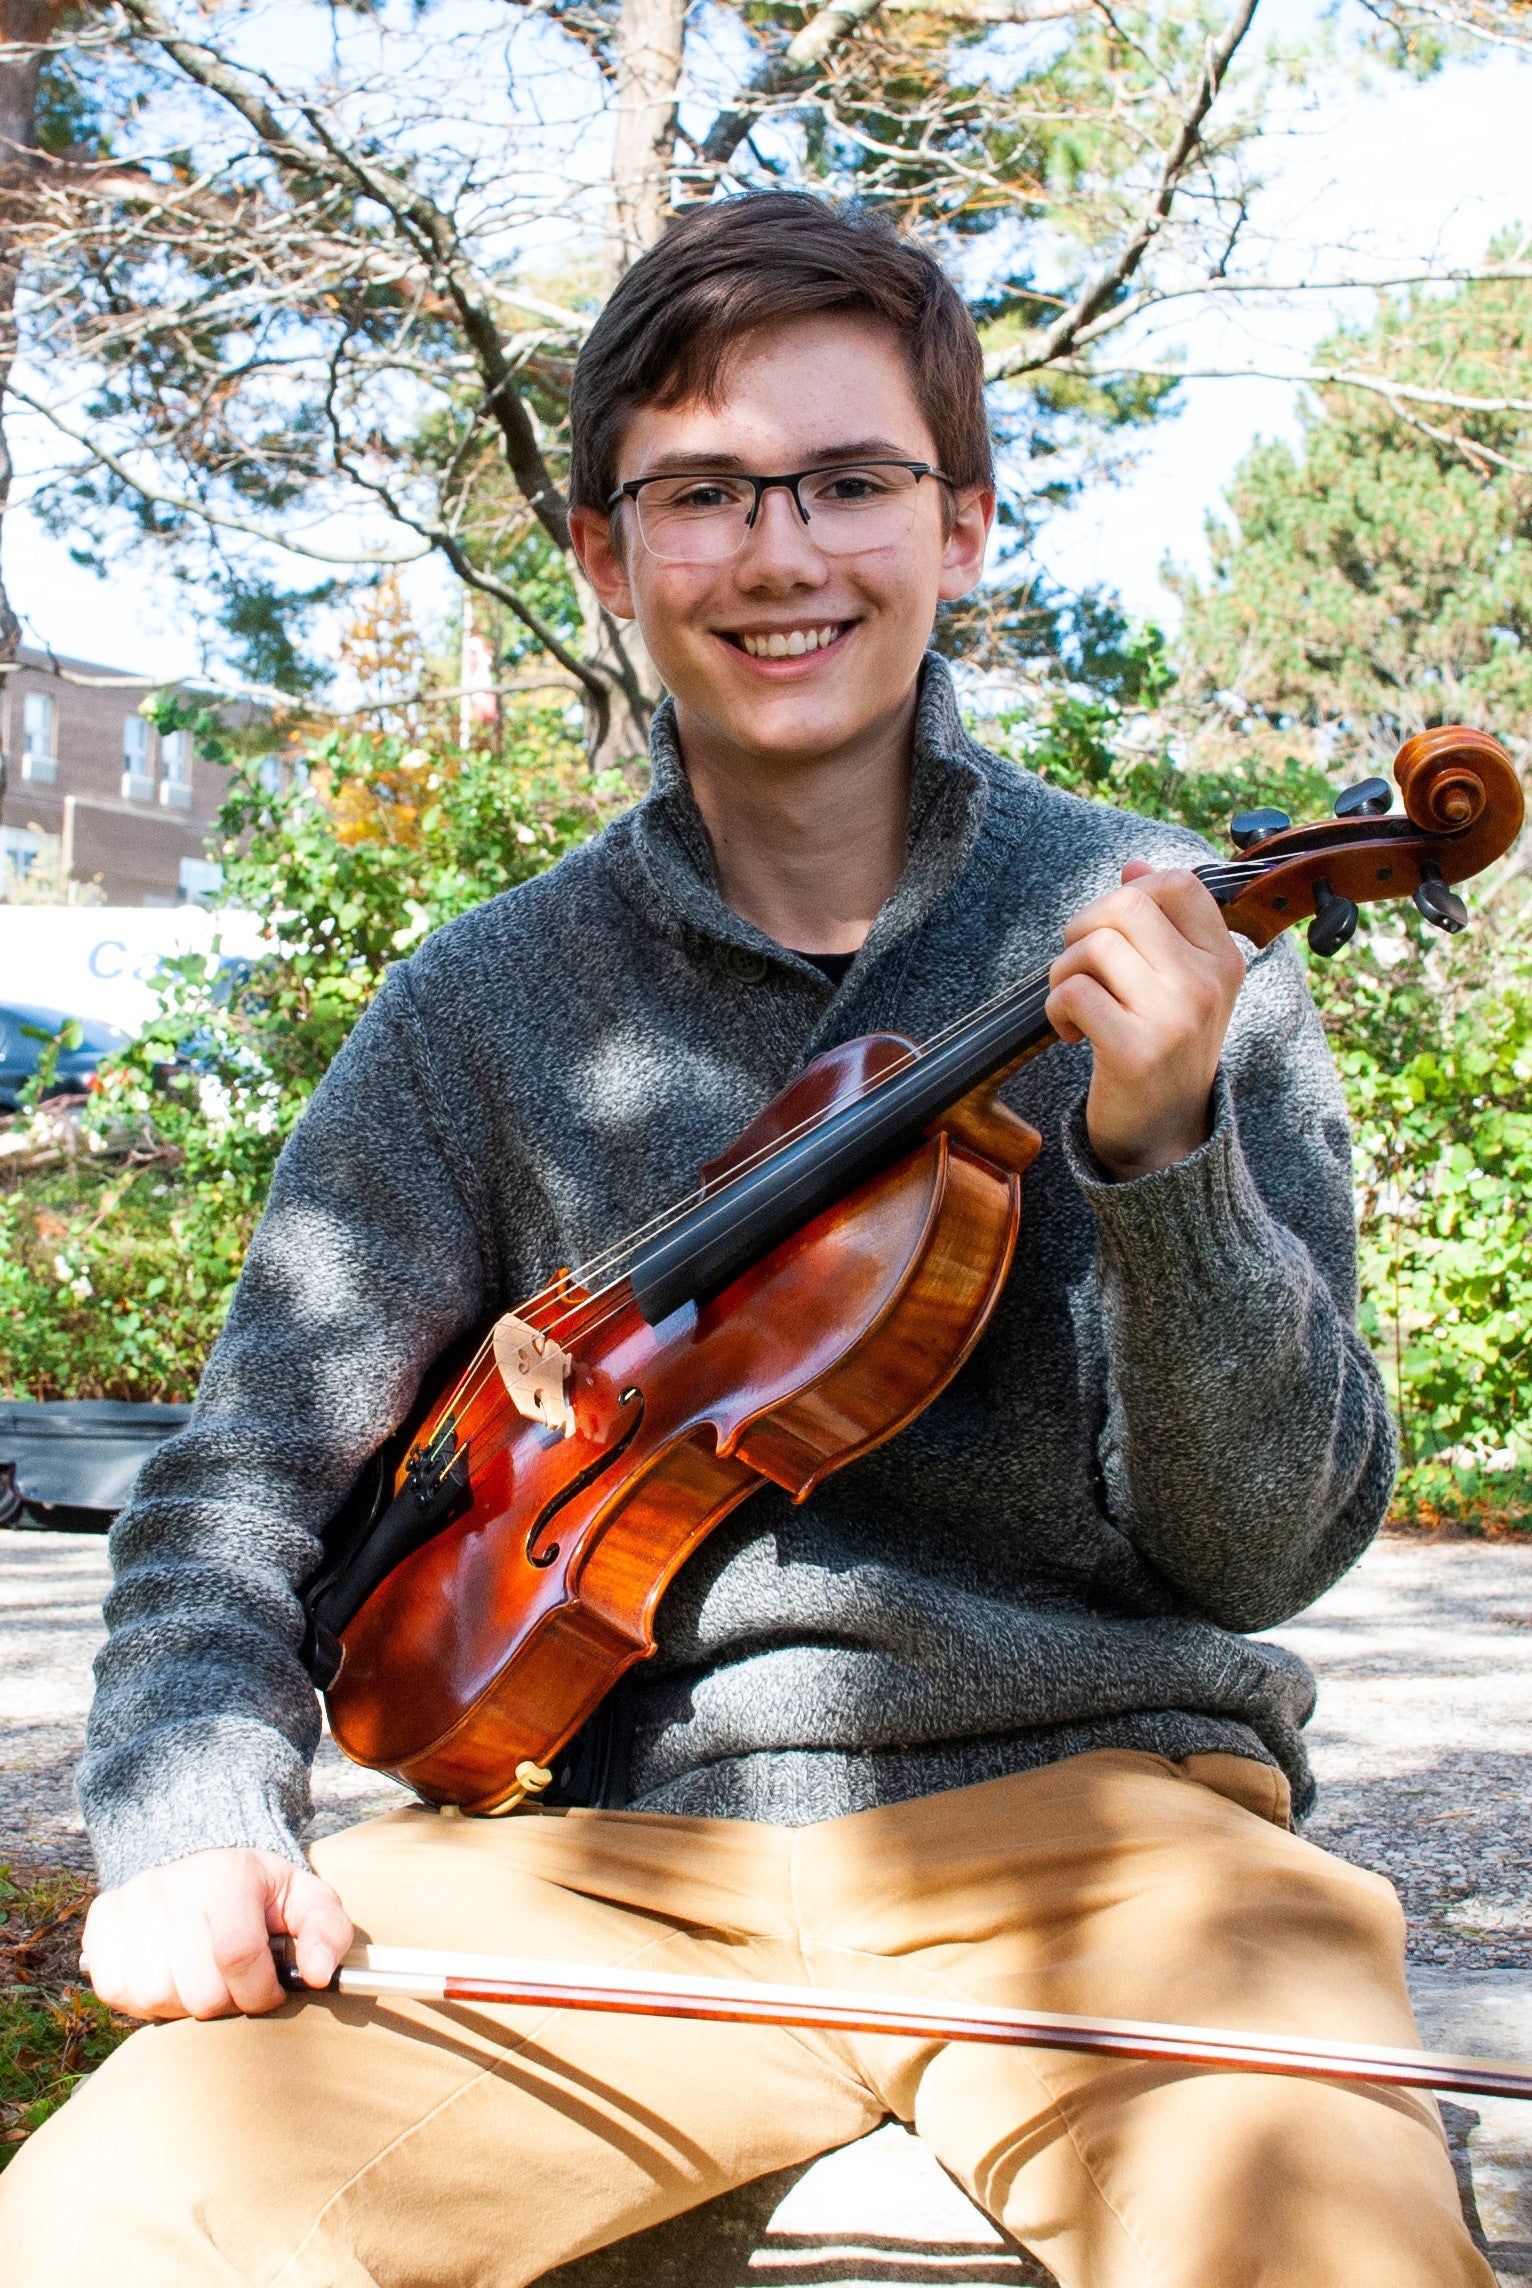 Stuart Matthews holdsing a violin